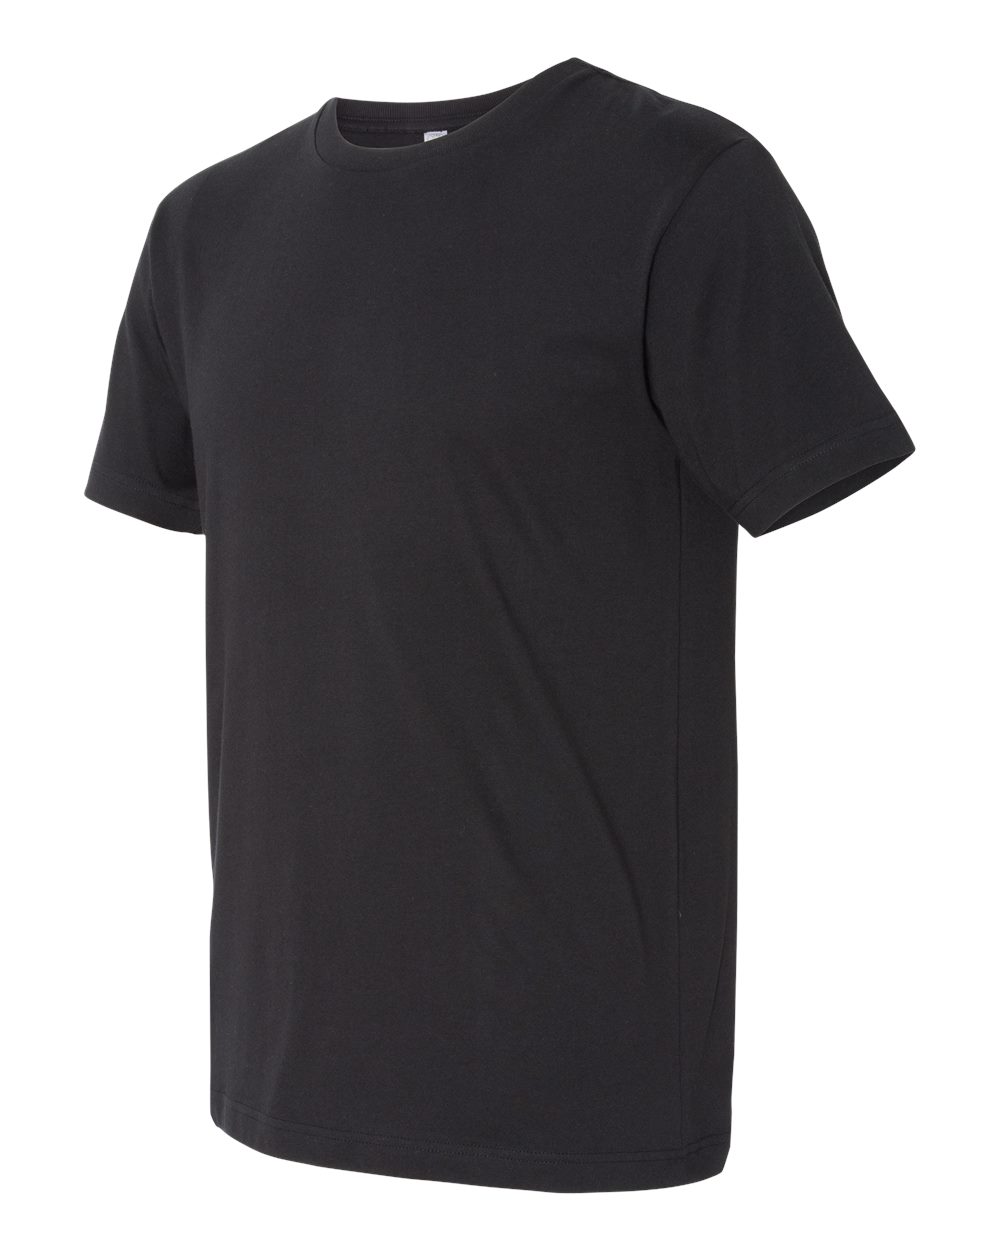 LAT 6980 - Heavyweight Combed Ringspun Cotton T-Shirt $5.63 - T-Shirts